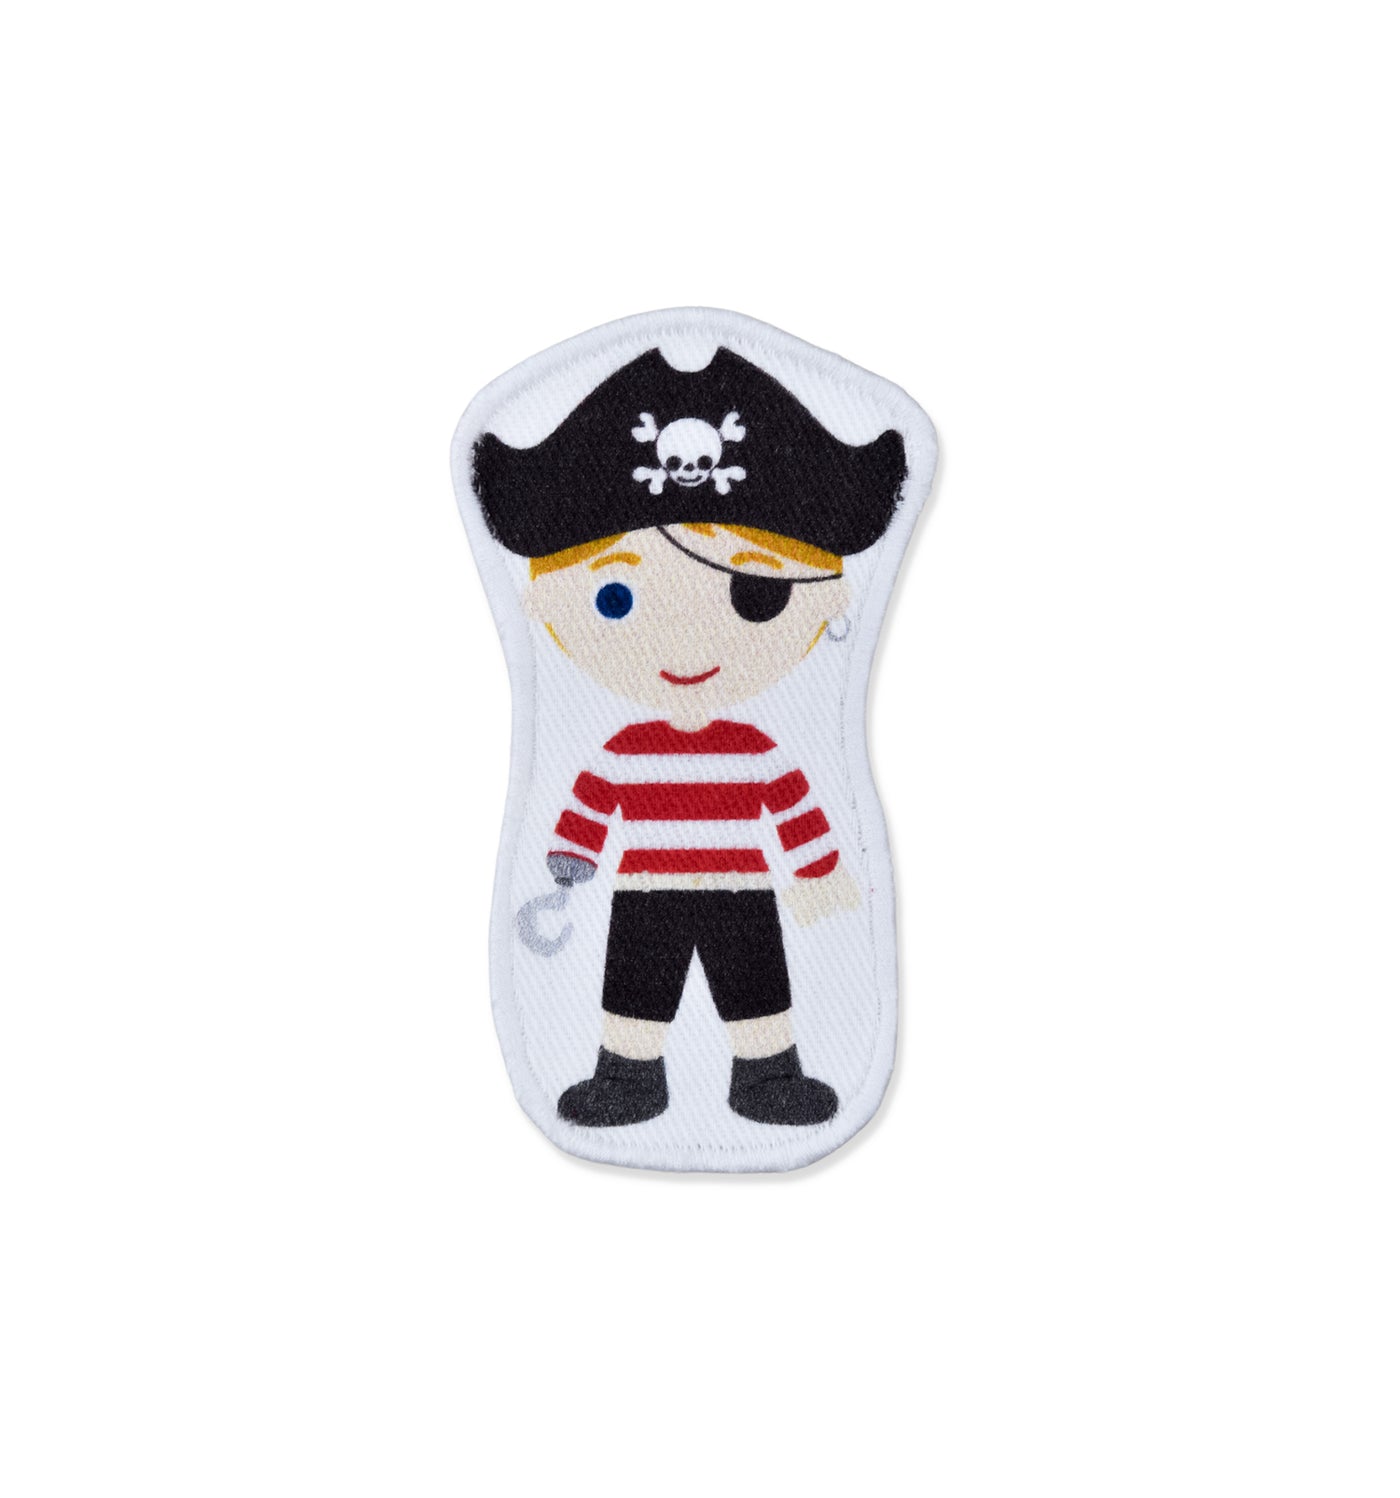 Applikation Pirat Captain Jack | sticklett Online Store.